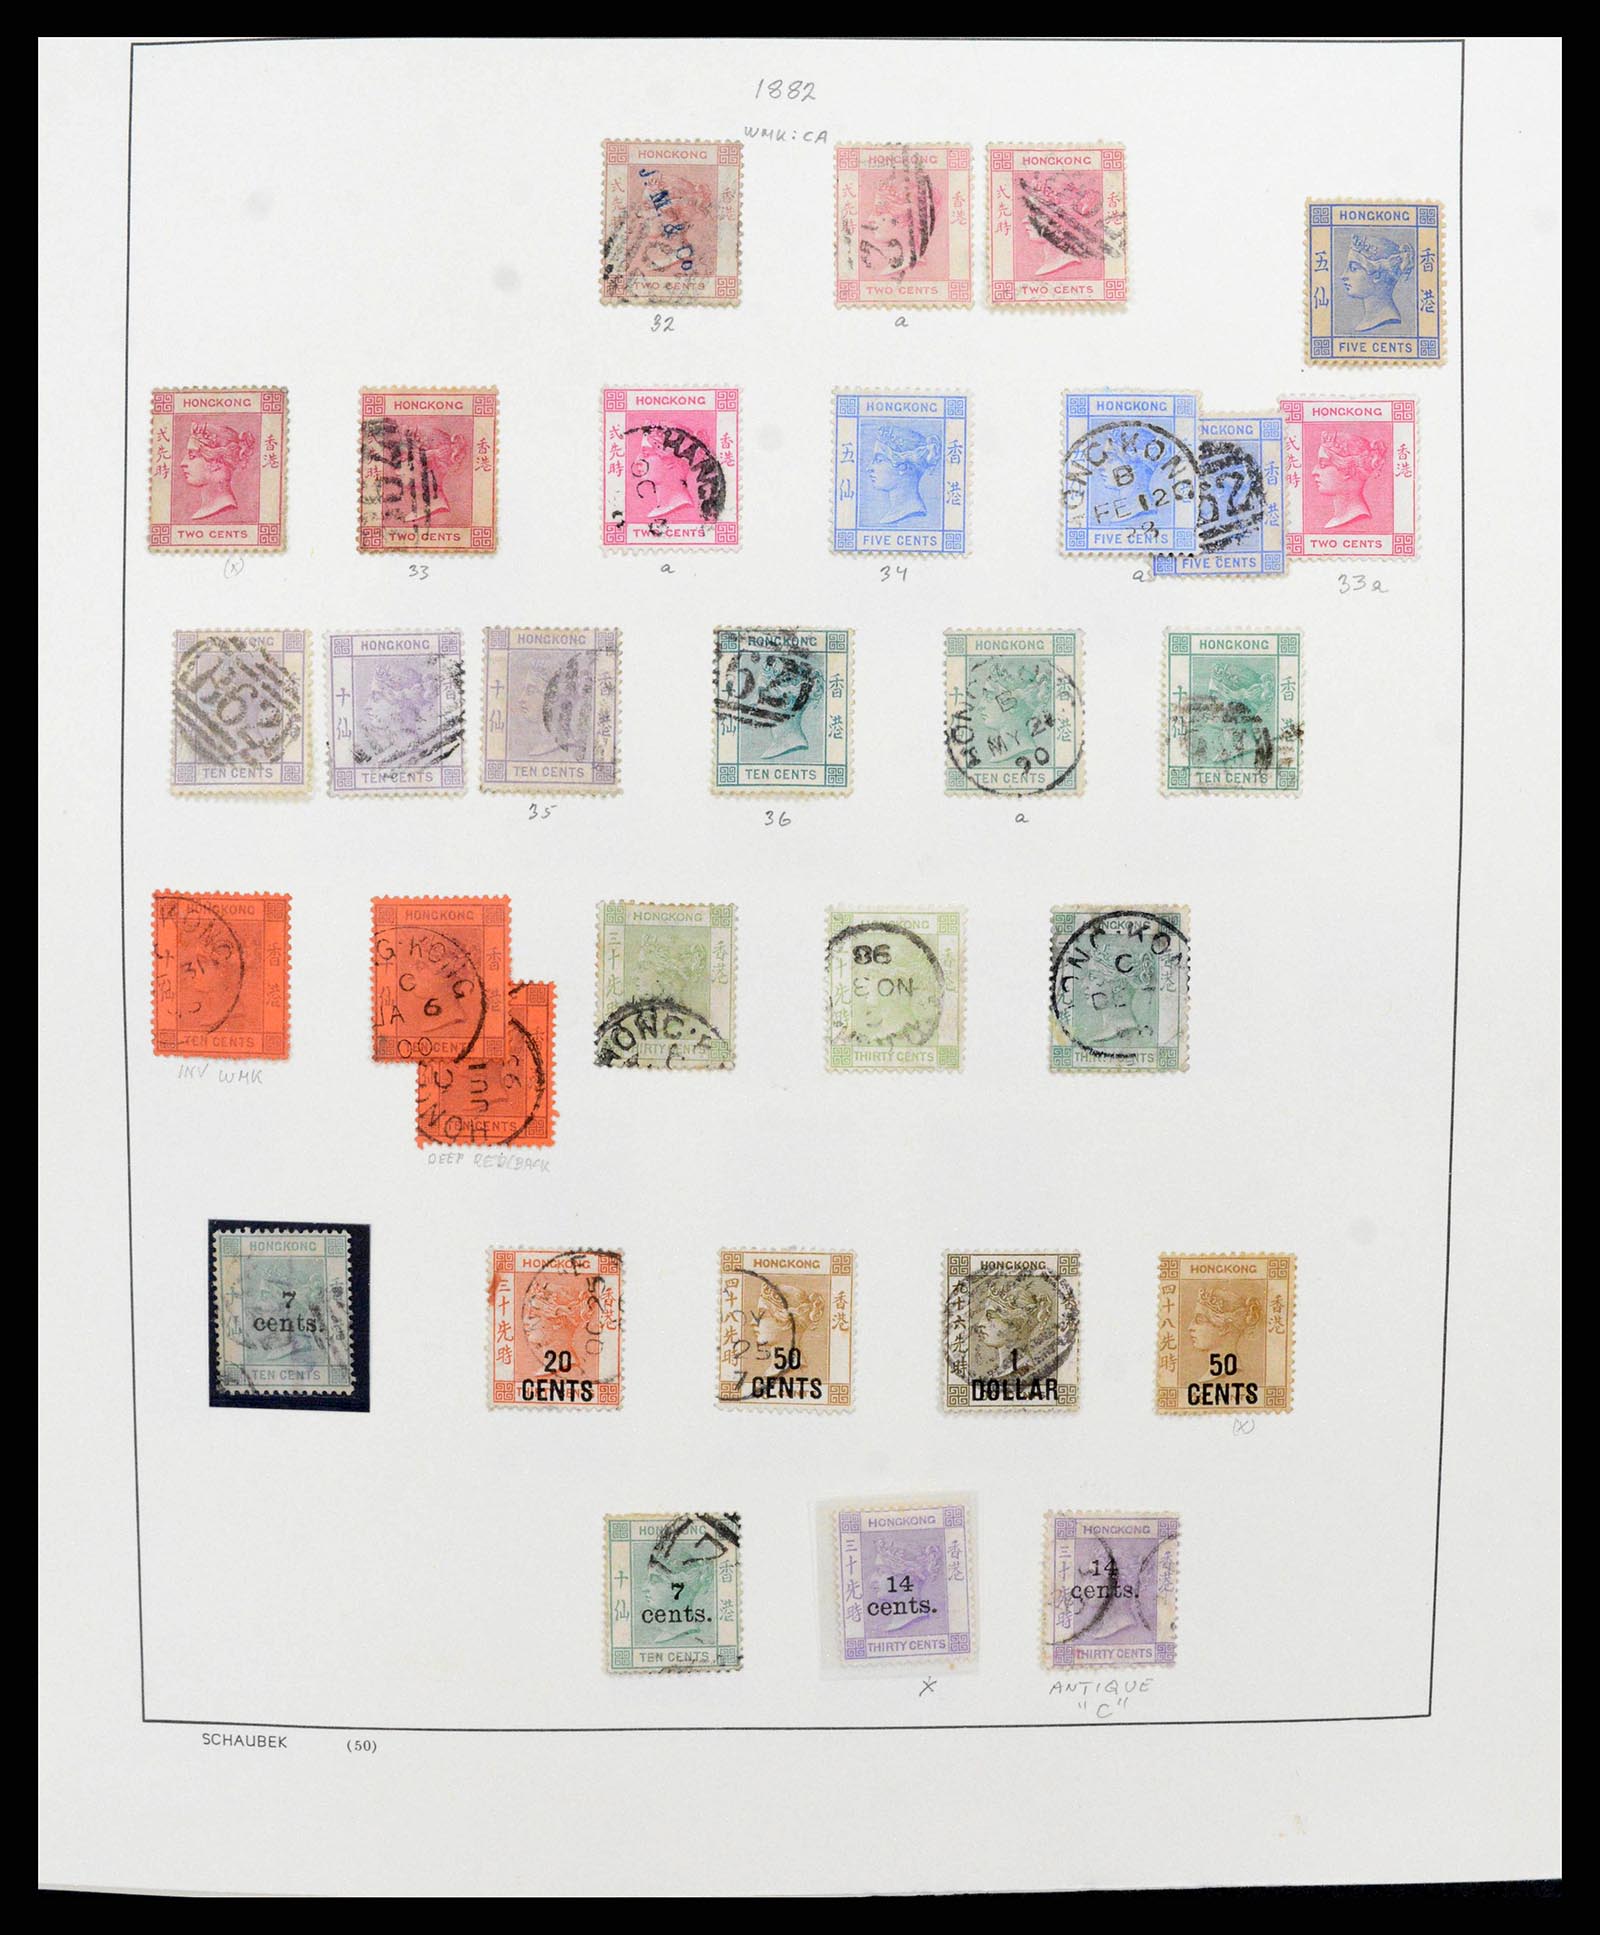 37955 0006 - Stamp collection 37955 Hong Kong supercollection 1862-2007.